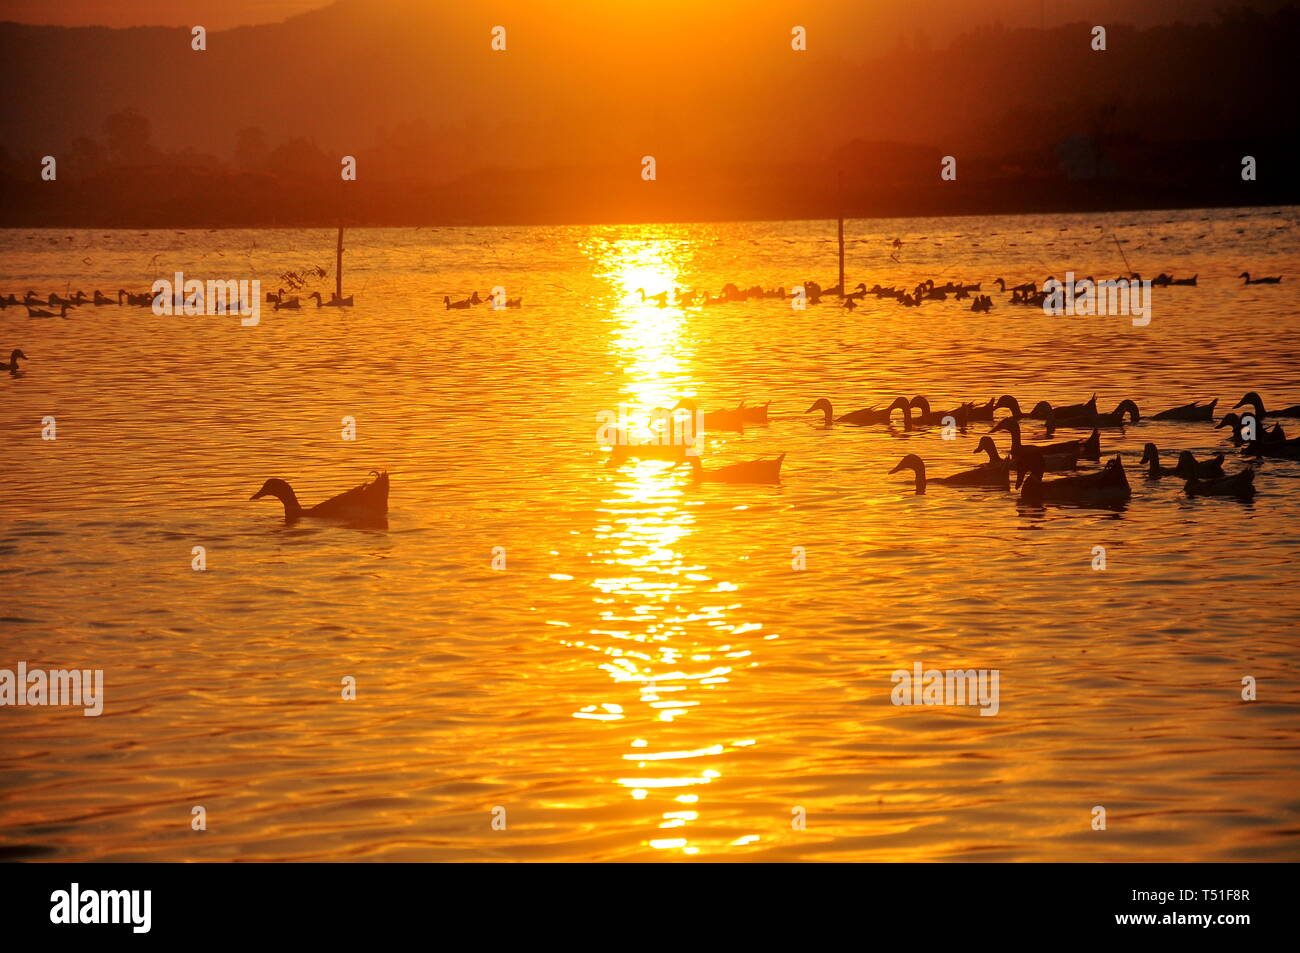 coming home - sunset on the lake in PhuYen, VietNam Stock Photo